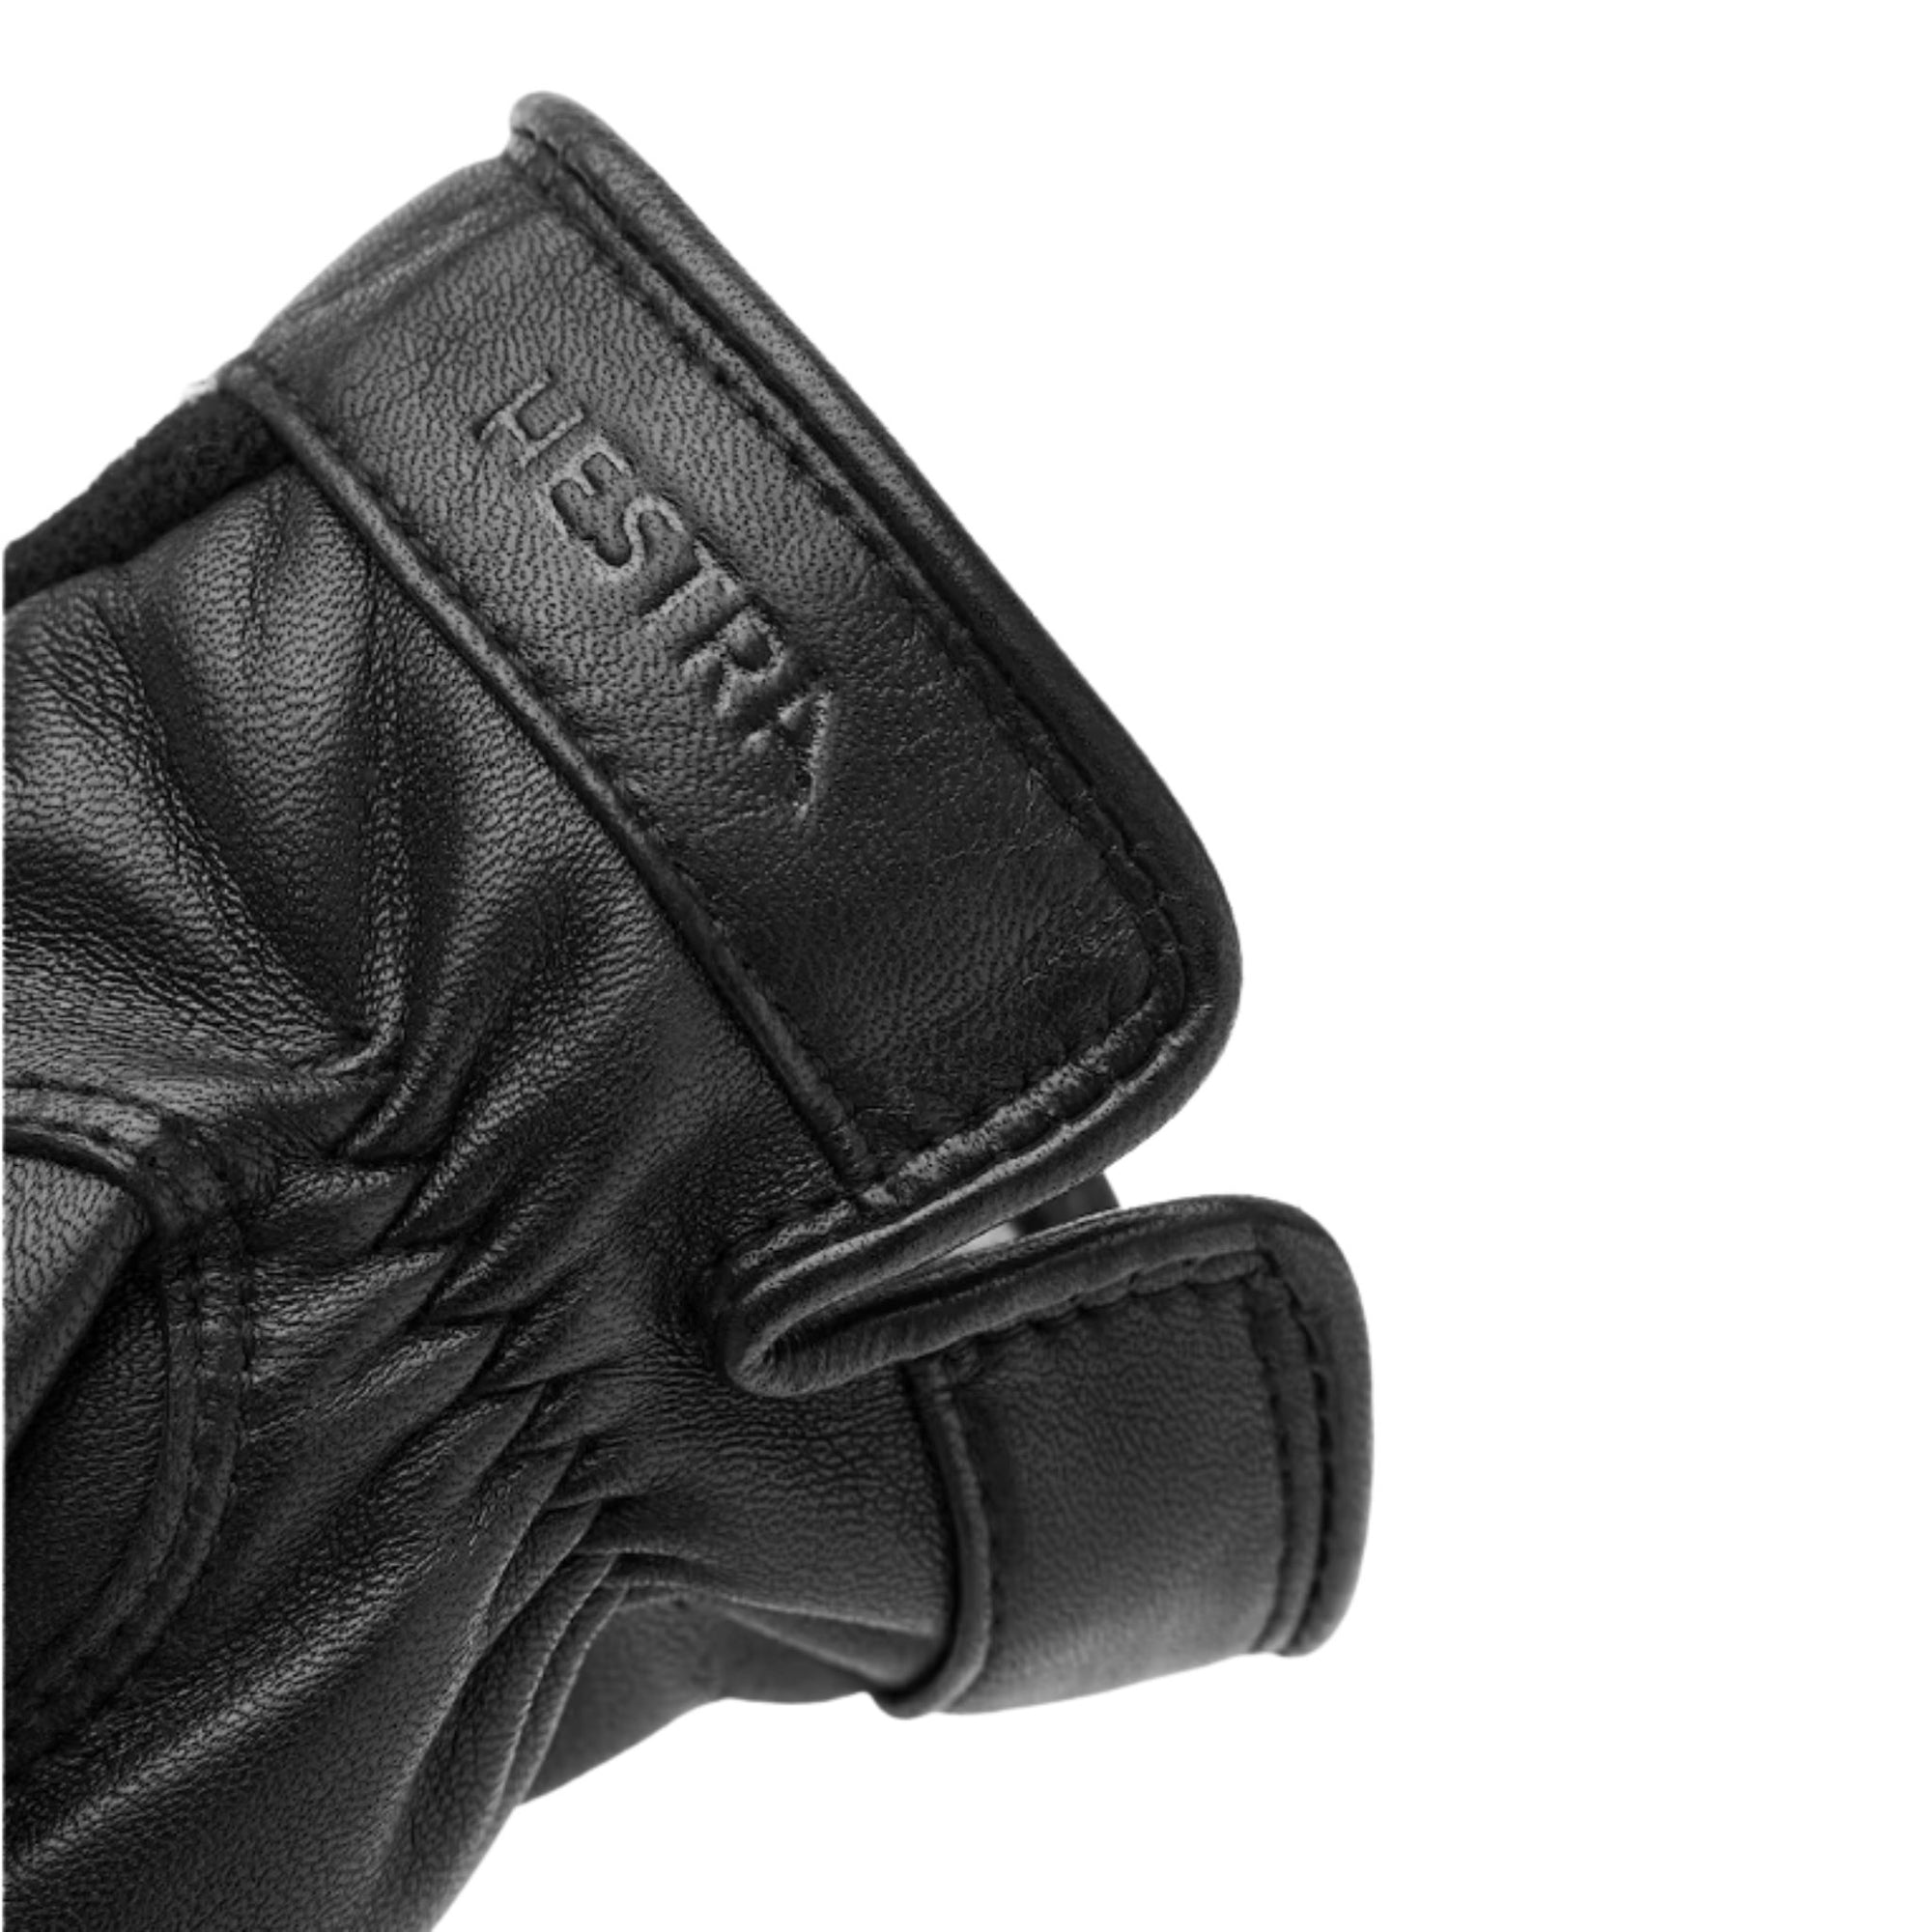 Womens Hestra Saga Glove - Black Après Gloves Hestra 7 (M) 